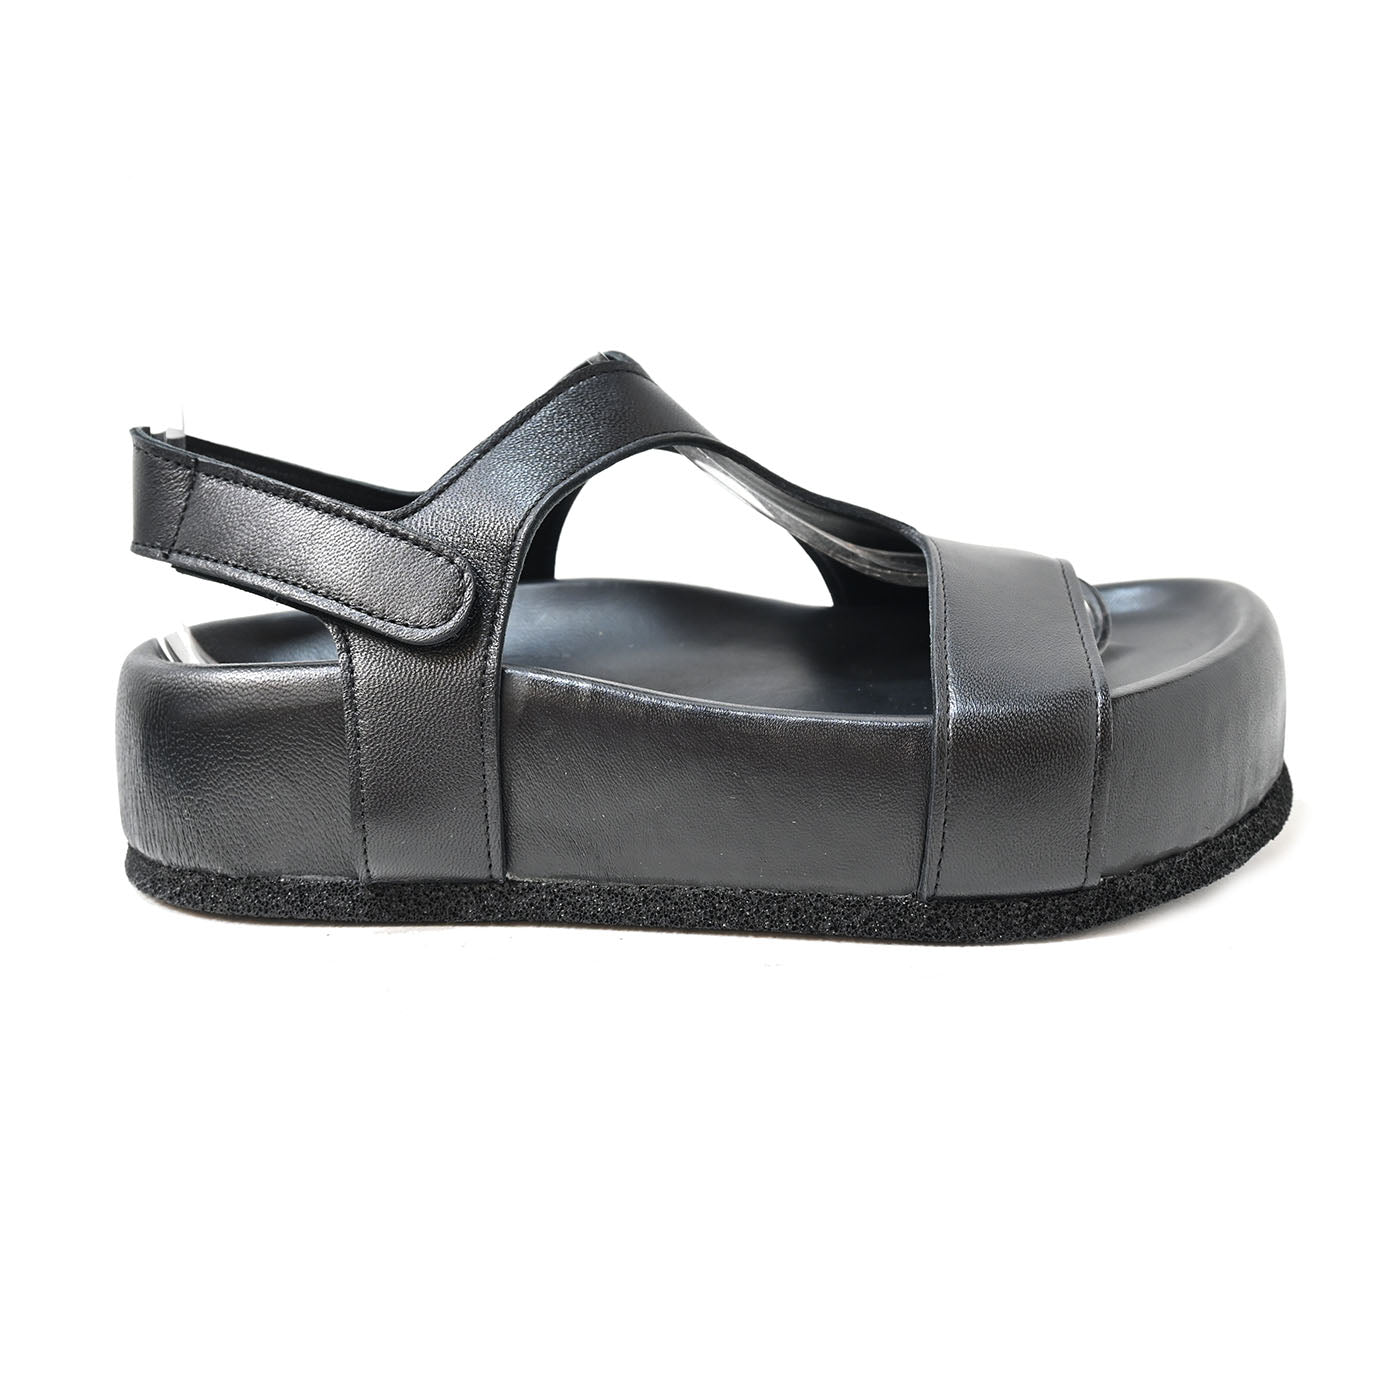 AIDA 03 - sandals leather BLACK